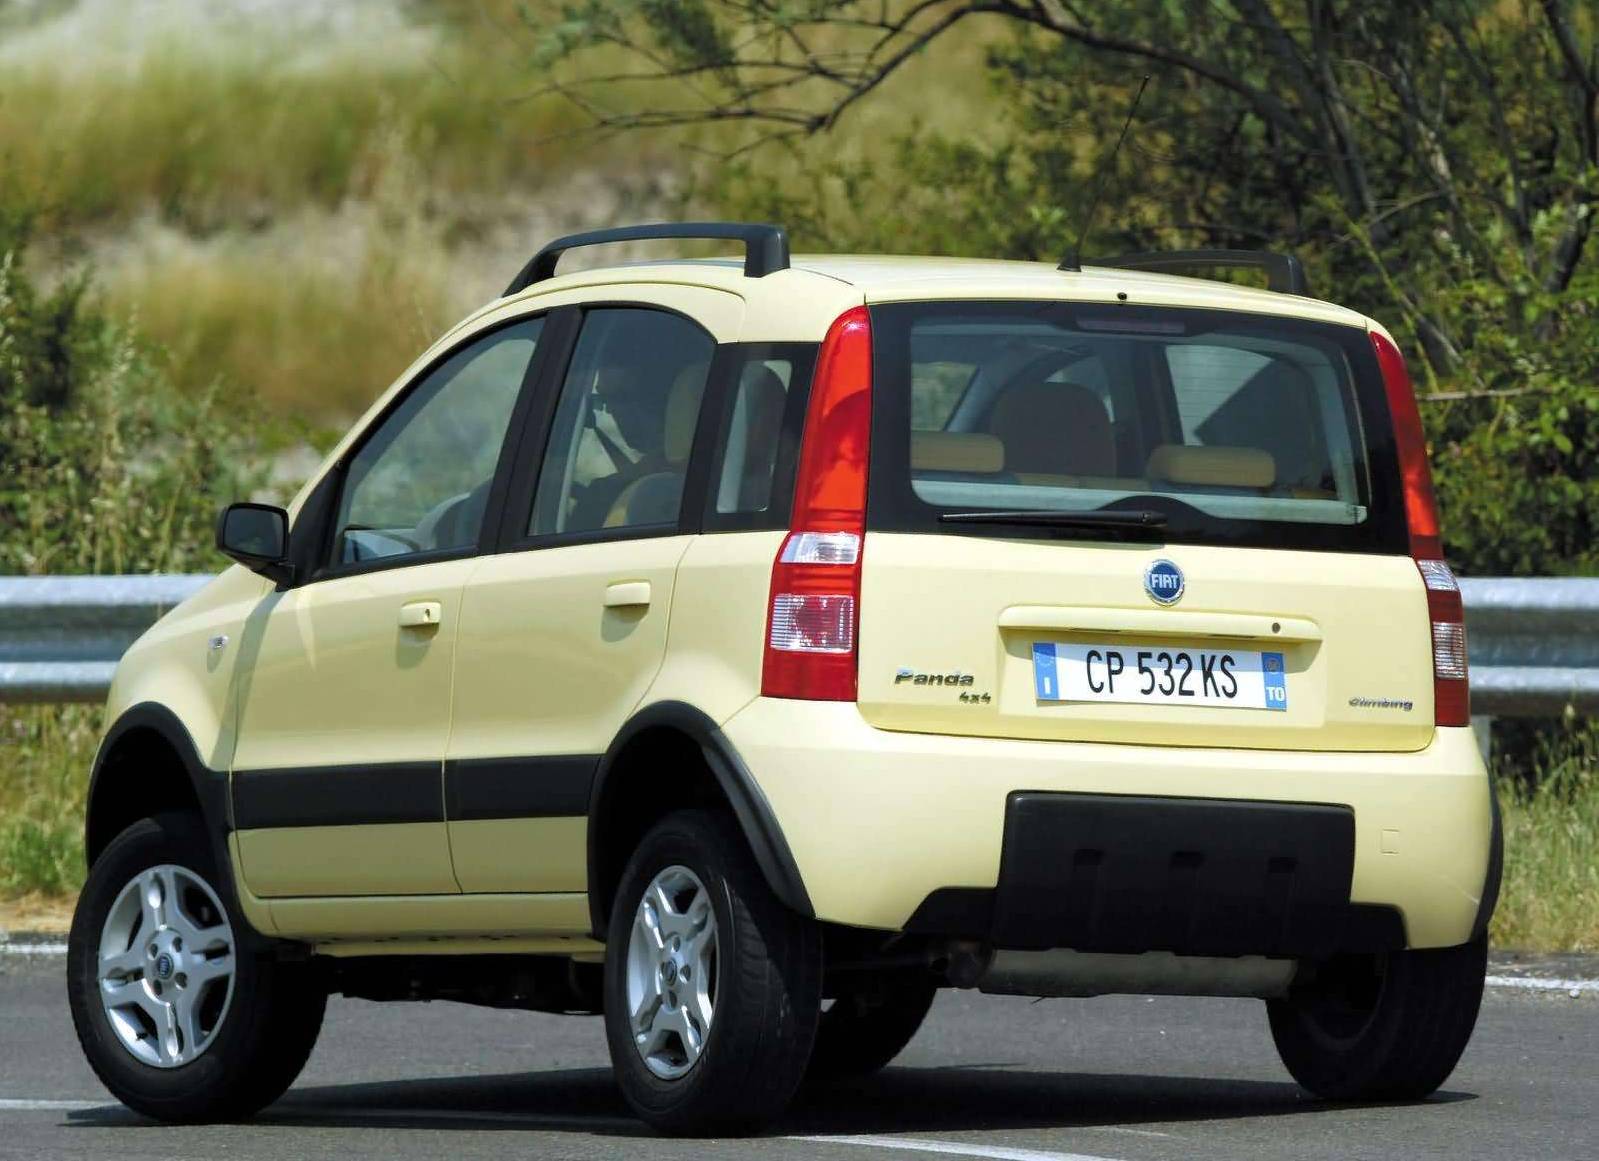 Fiat-Panda_4x4-2004-1600-38